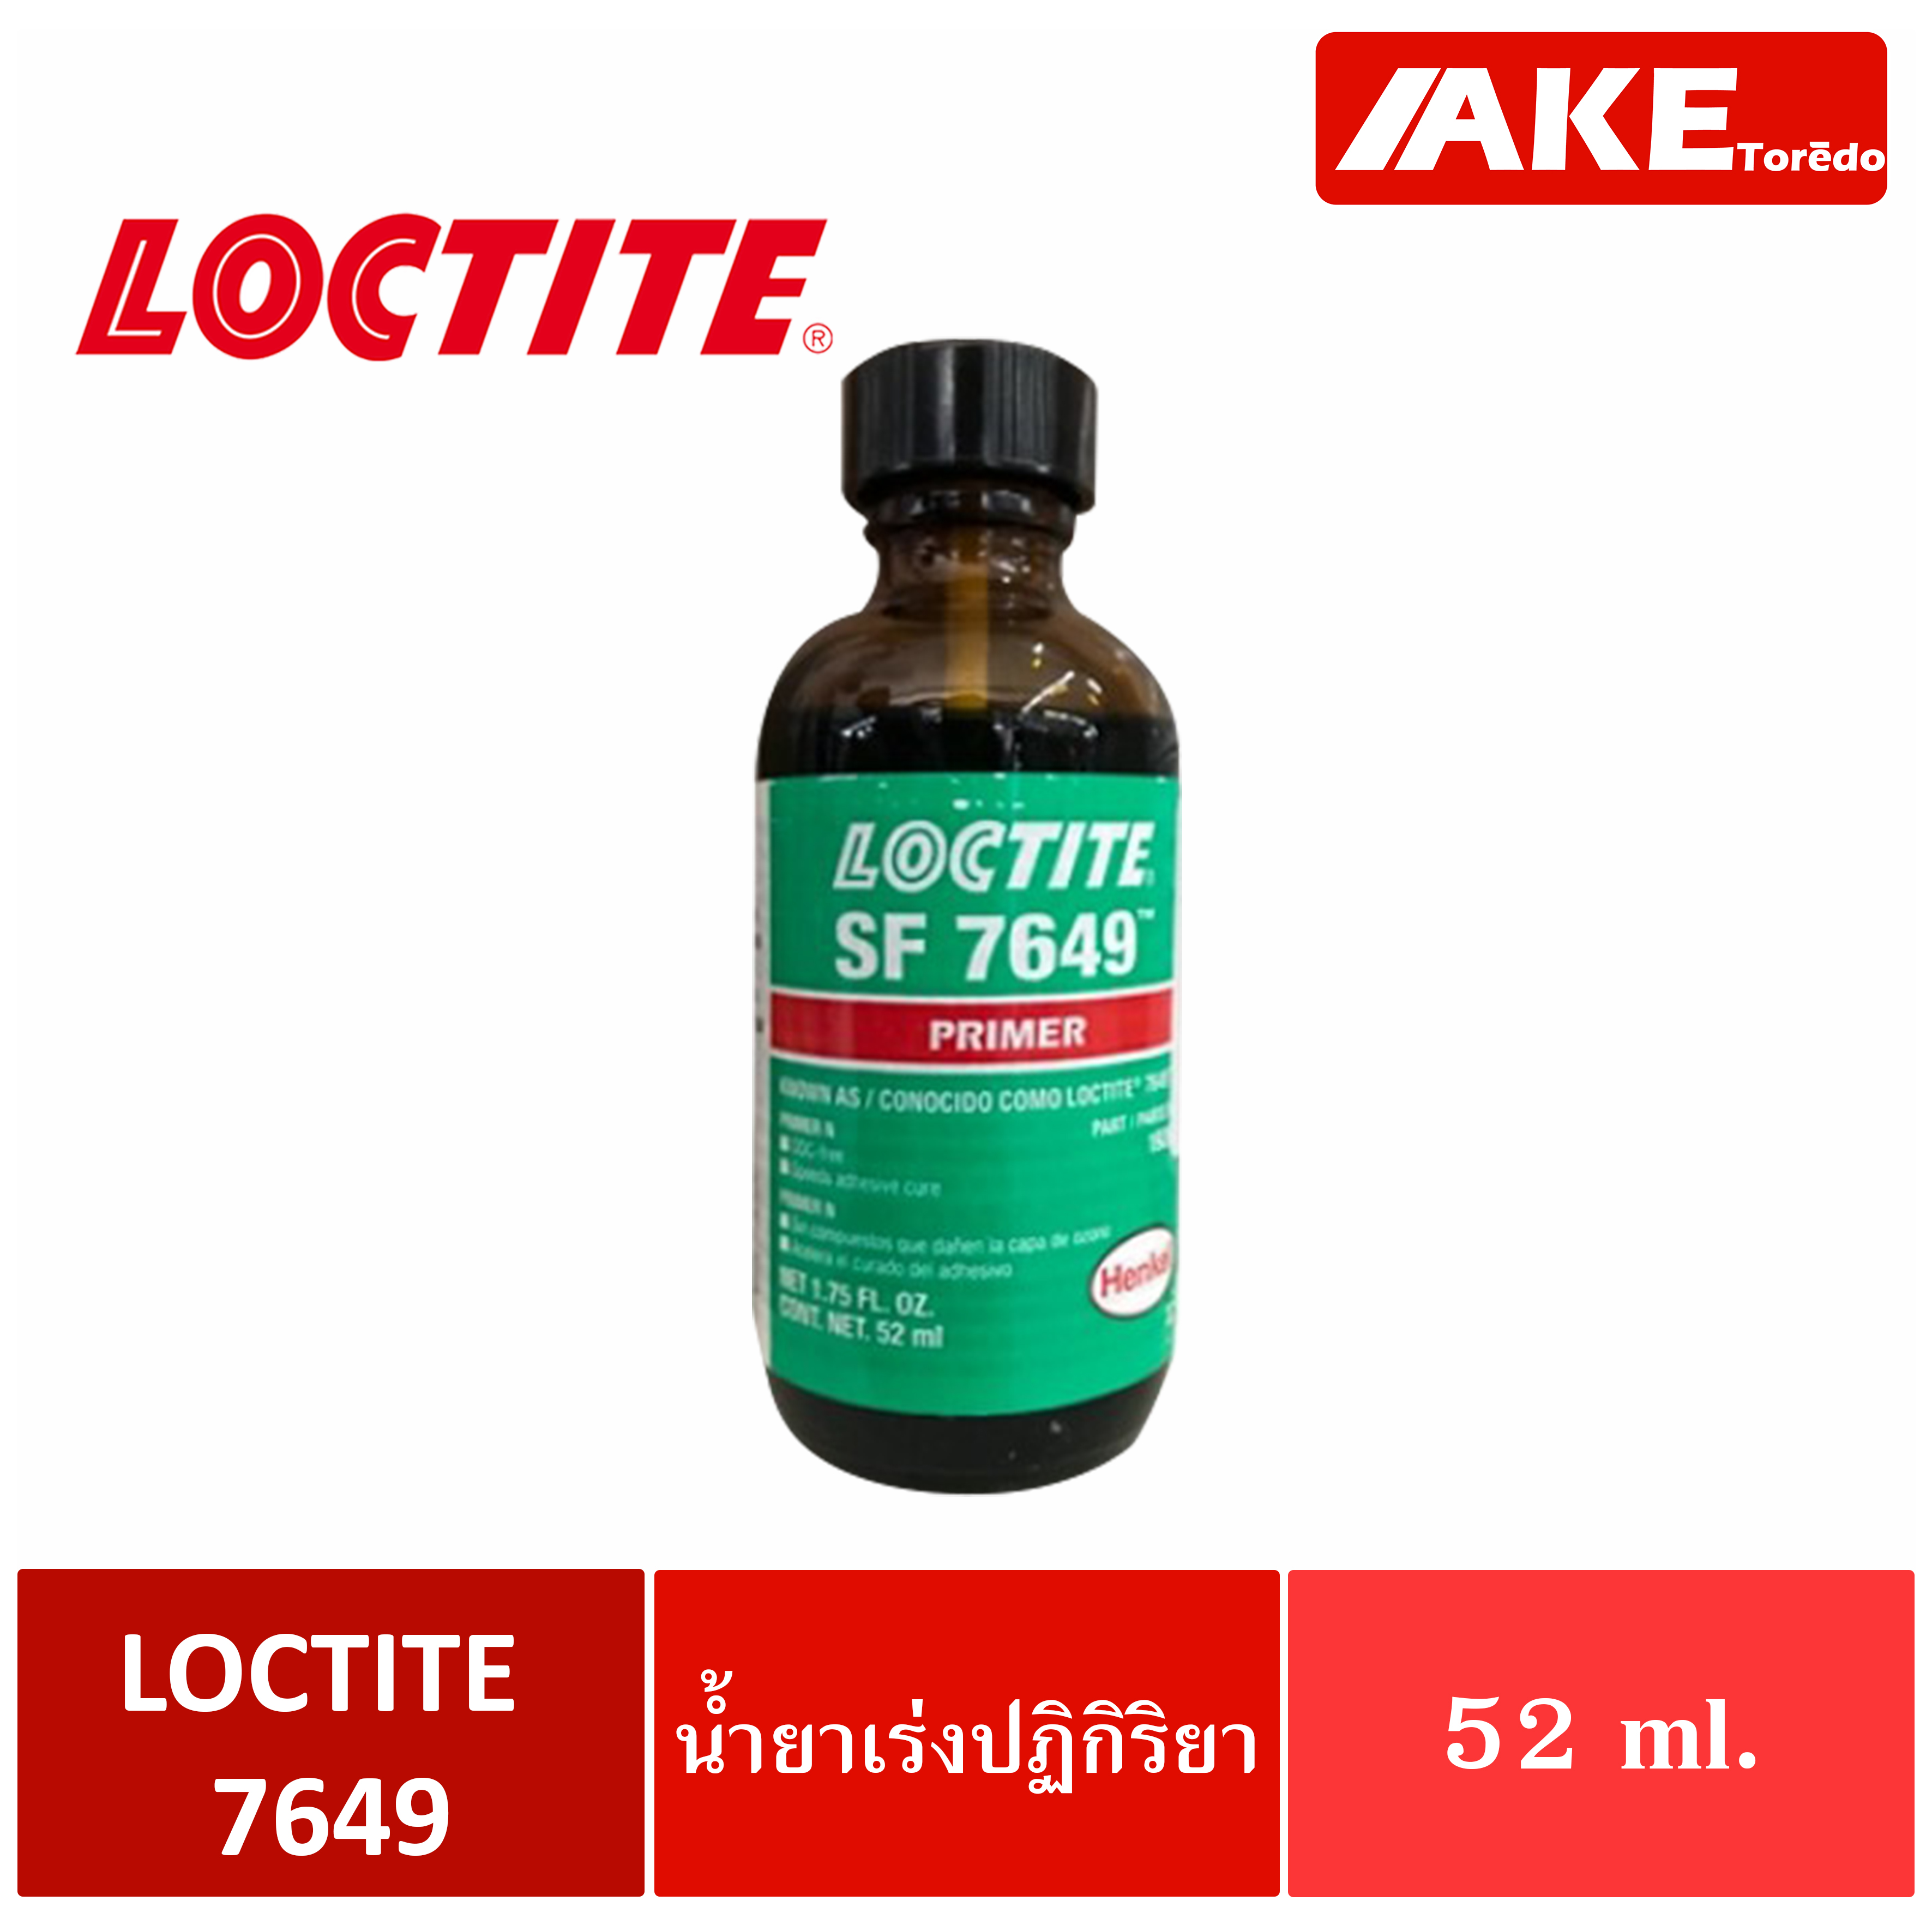 LOCTITE 7649 ( ล็อคไทท์ ) Primer N น้ำยาเร่งปฏิกิริยา 52 ml จัดจำหน่ายโดย AKE Torēdo